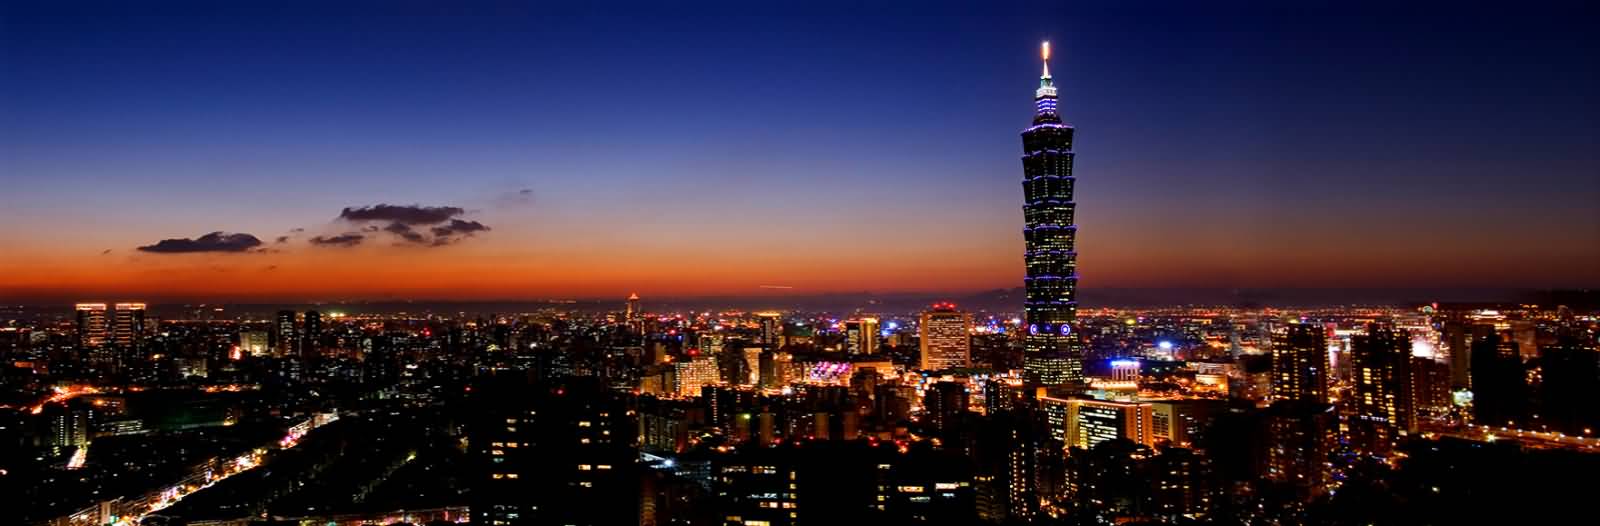 Panorama View Of The Taipei 101 Tower And Taipei City At Dusk